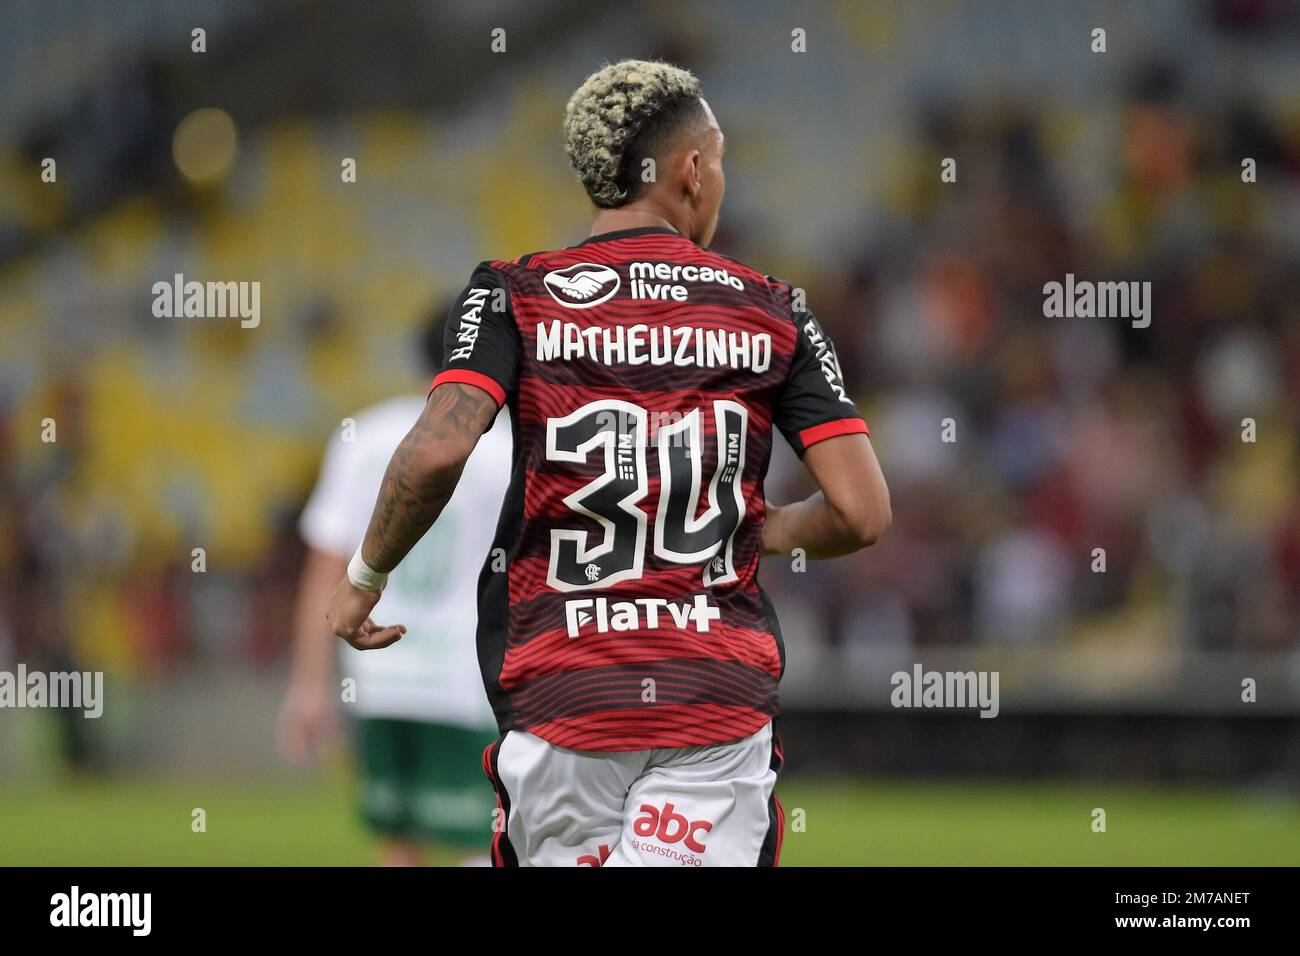 Rio de Janeiro, Brazil,June 15, 2022. Football player Matheuzinho of flamengo team, during the game against the cuiabá team for the Brazilian champion Stock Photo